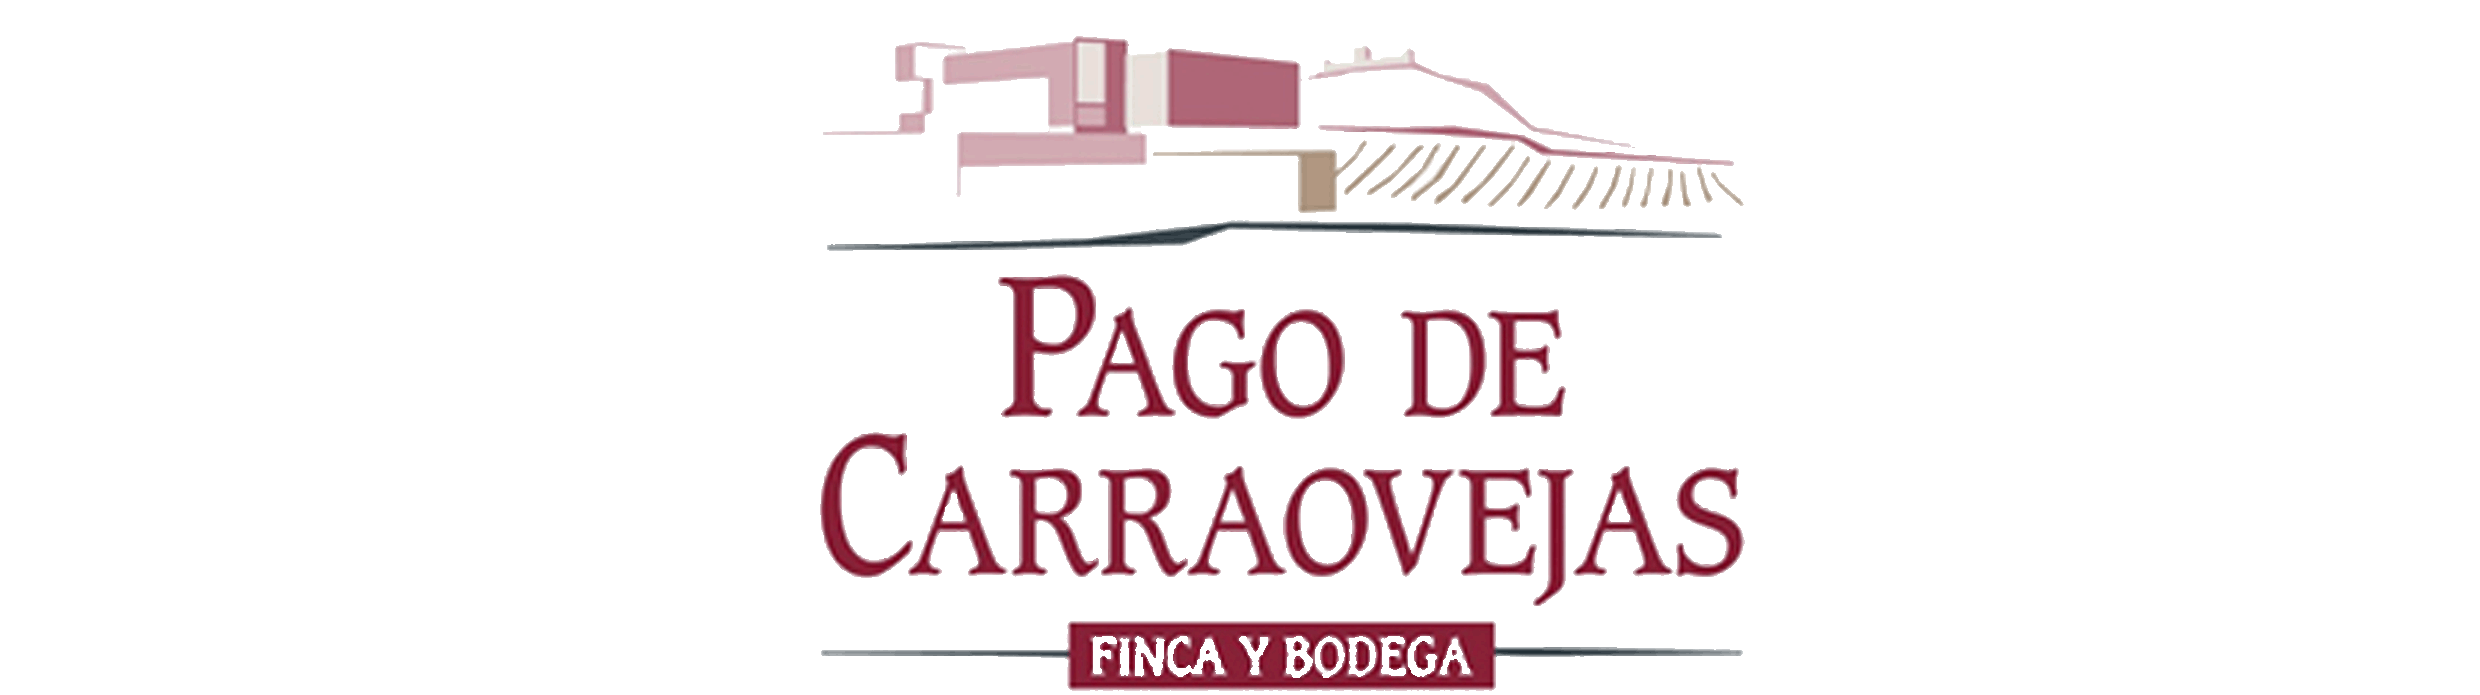 Bodegas Pago de Carraovejas